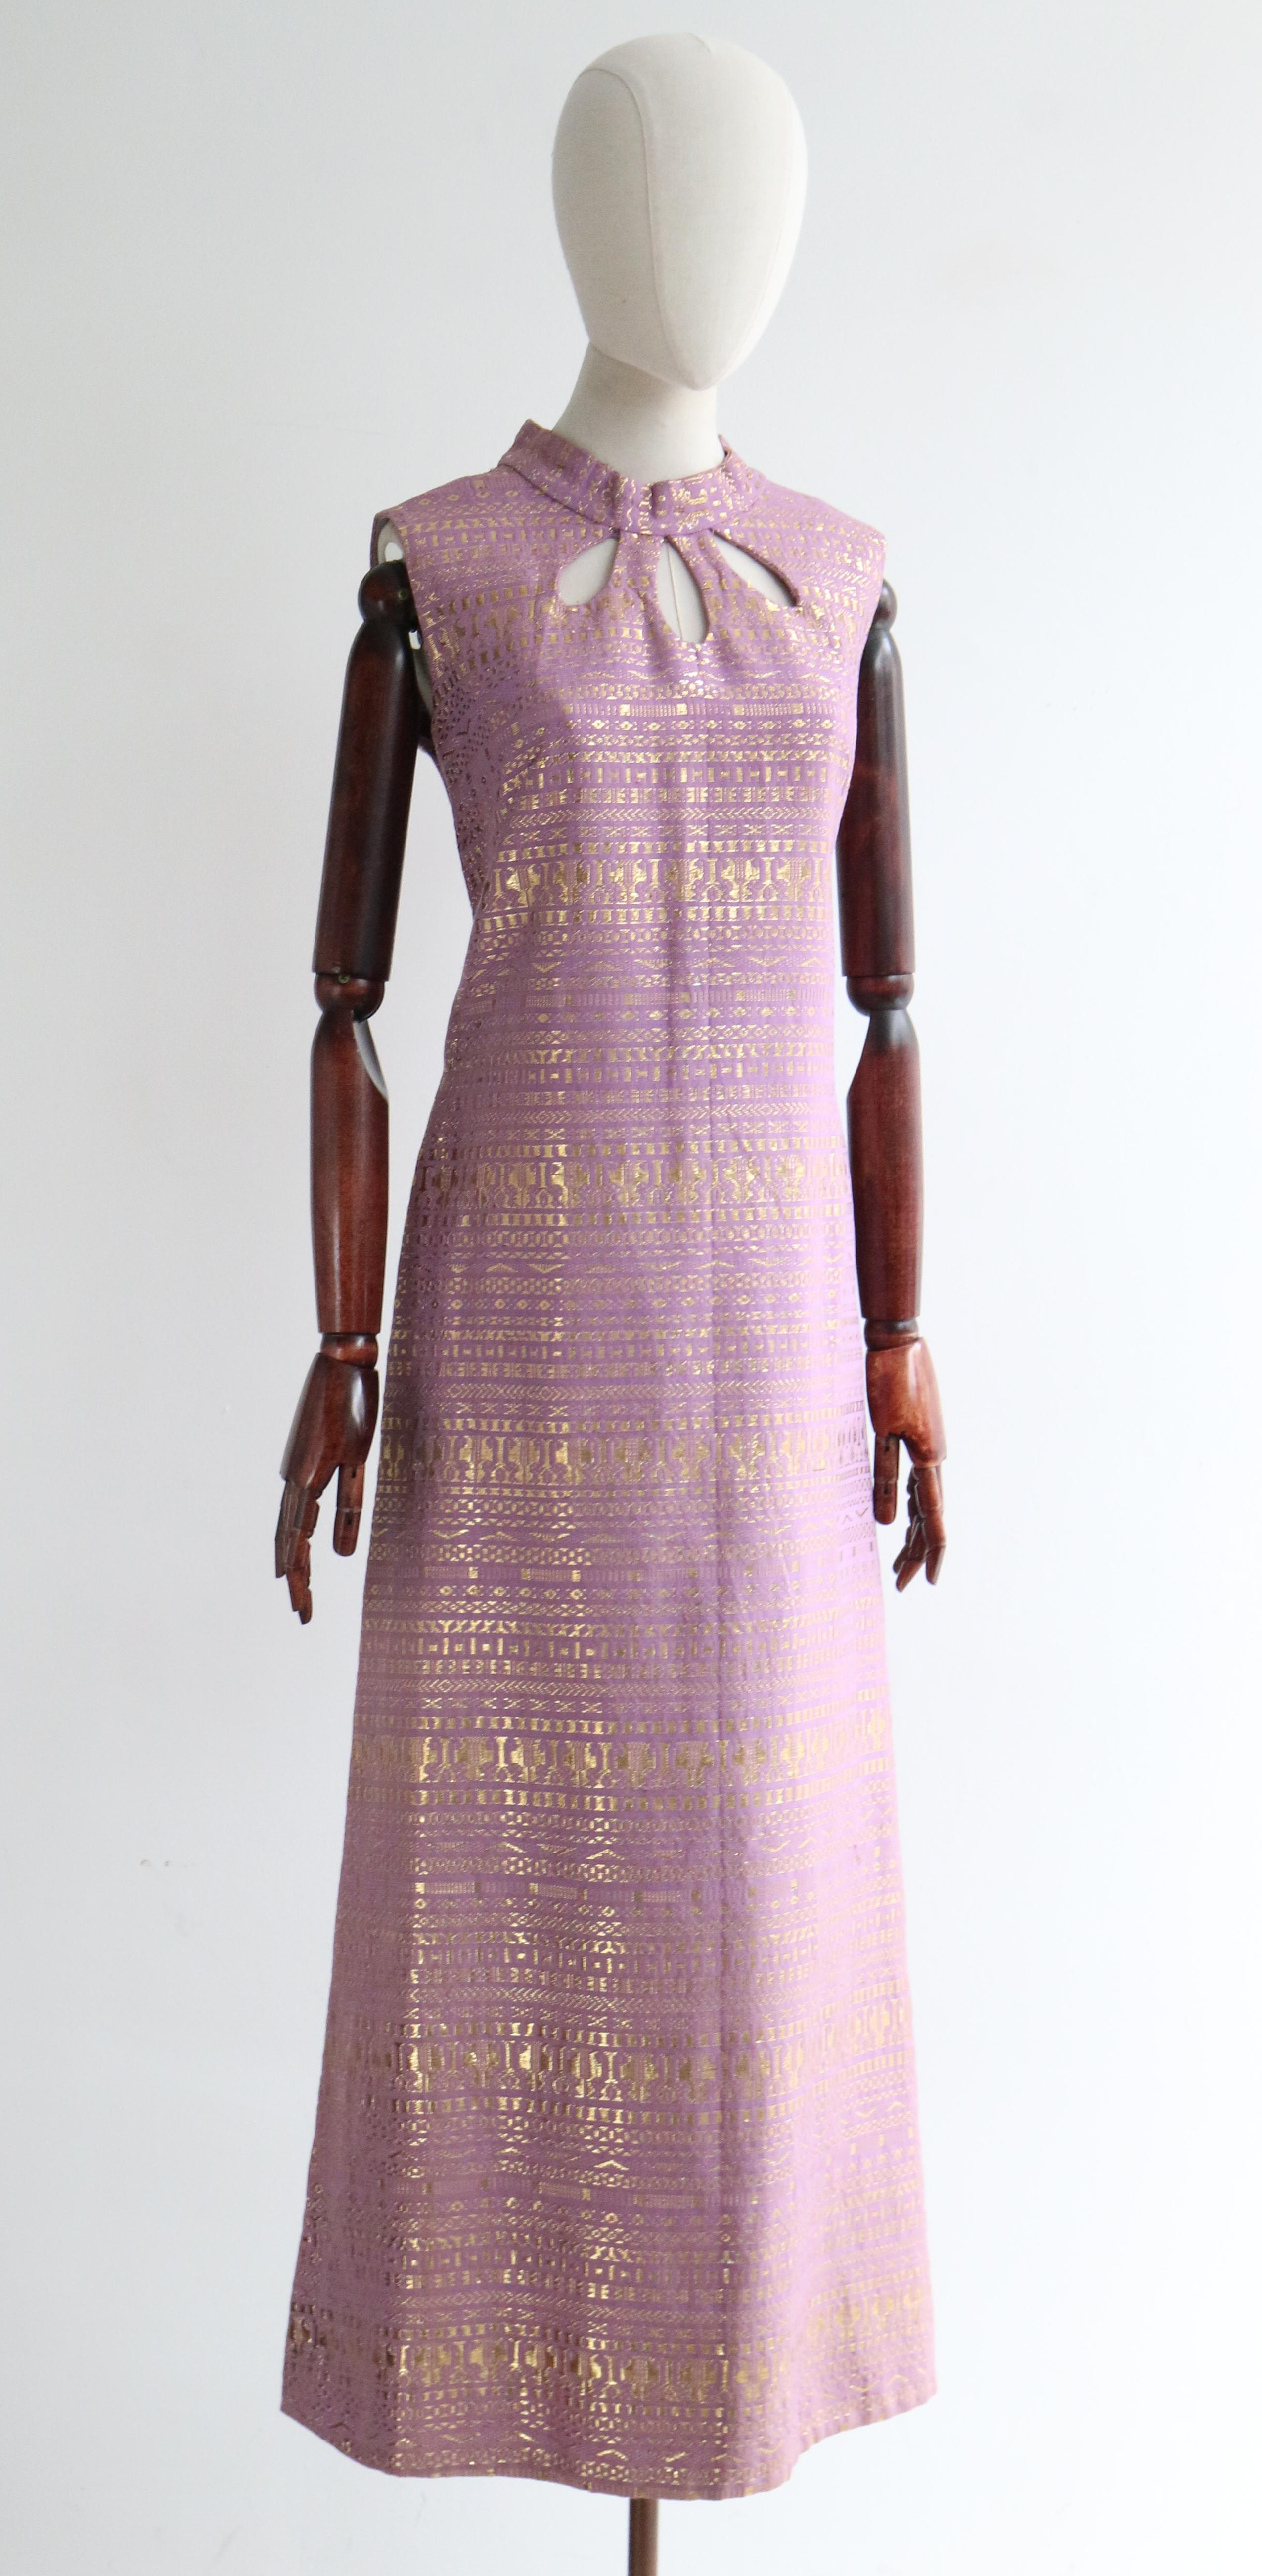 Women's Vintage 1960's Lilac & Gold Lurex Keyhole Dress UK 12-14 US 8-10 For Sale